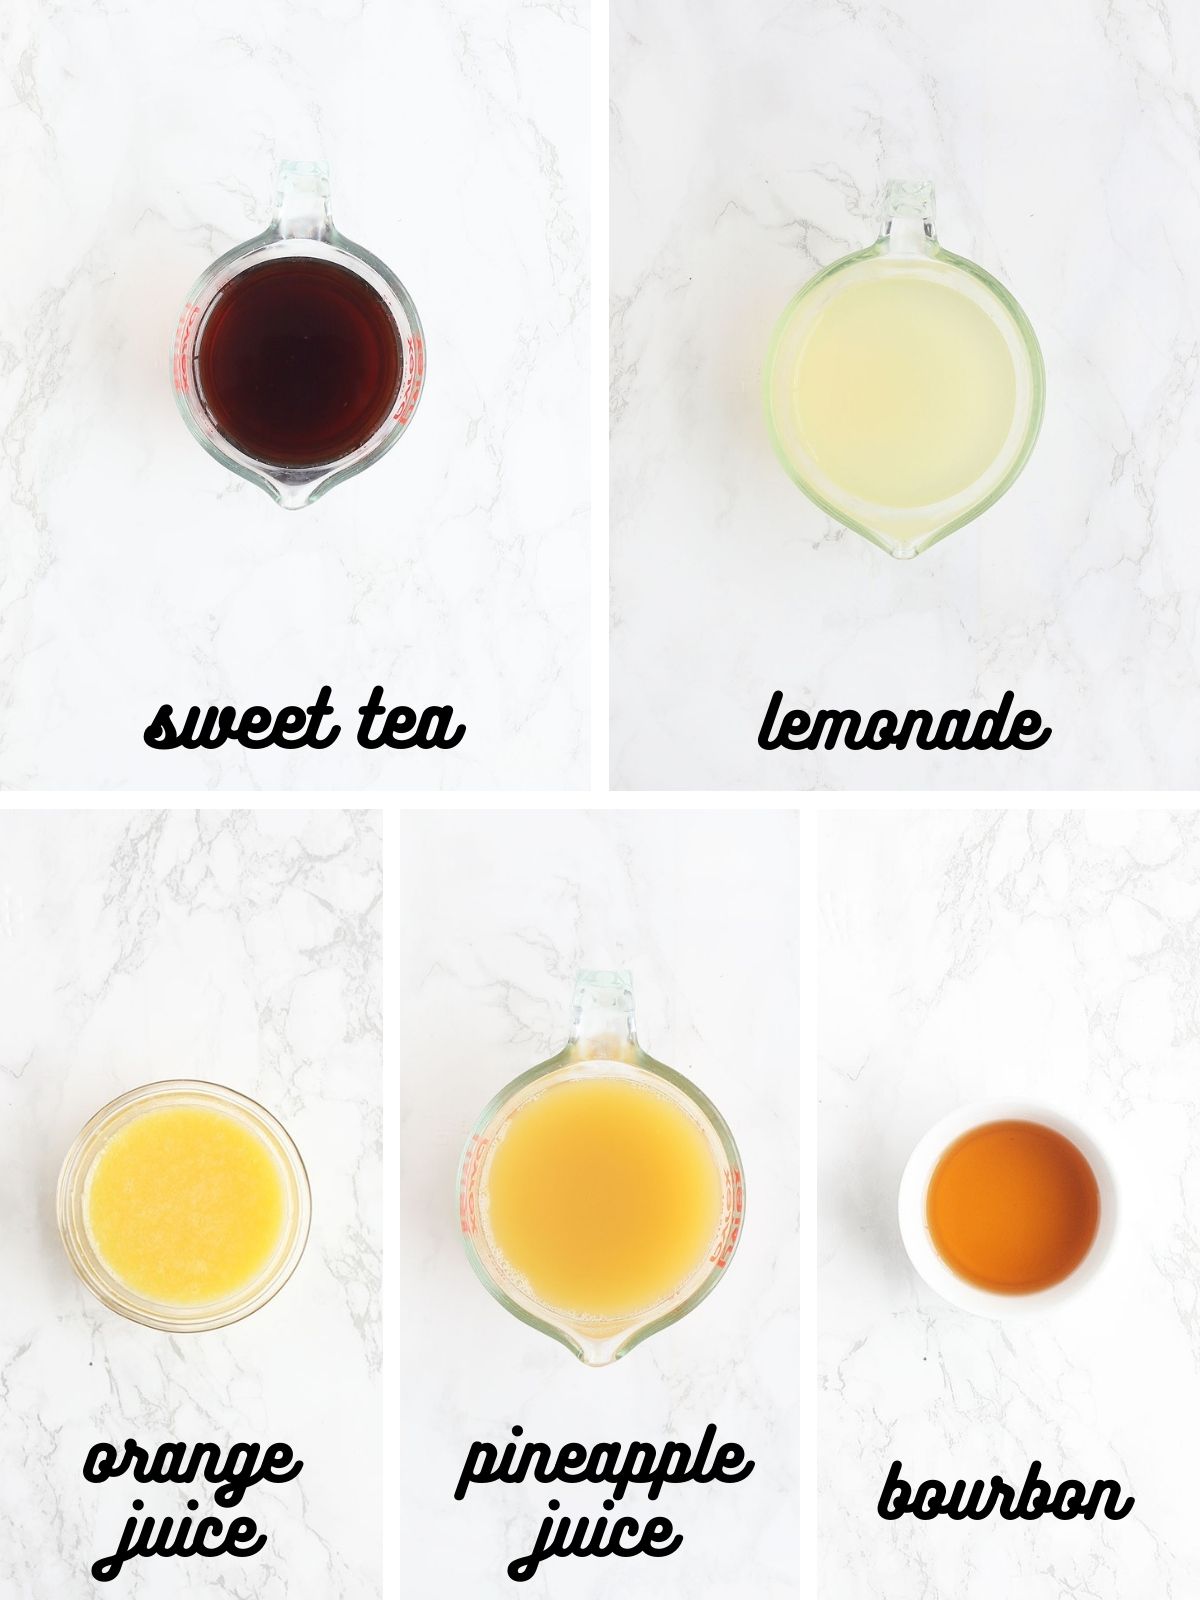 bourbon slush ingredients include sweet tea, lemonade, orange juice, pineapple juice and bourbon